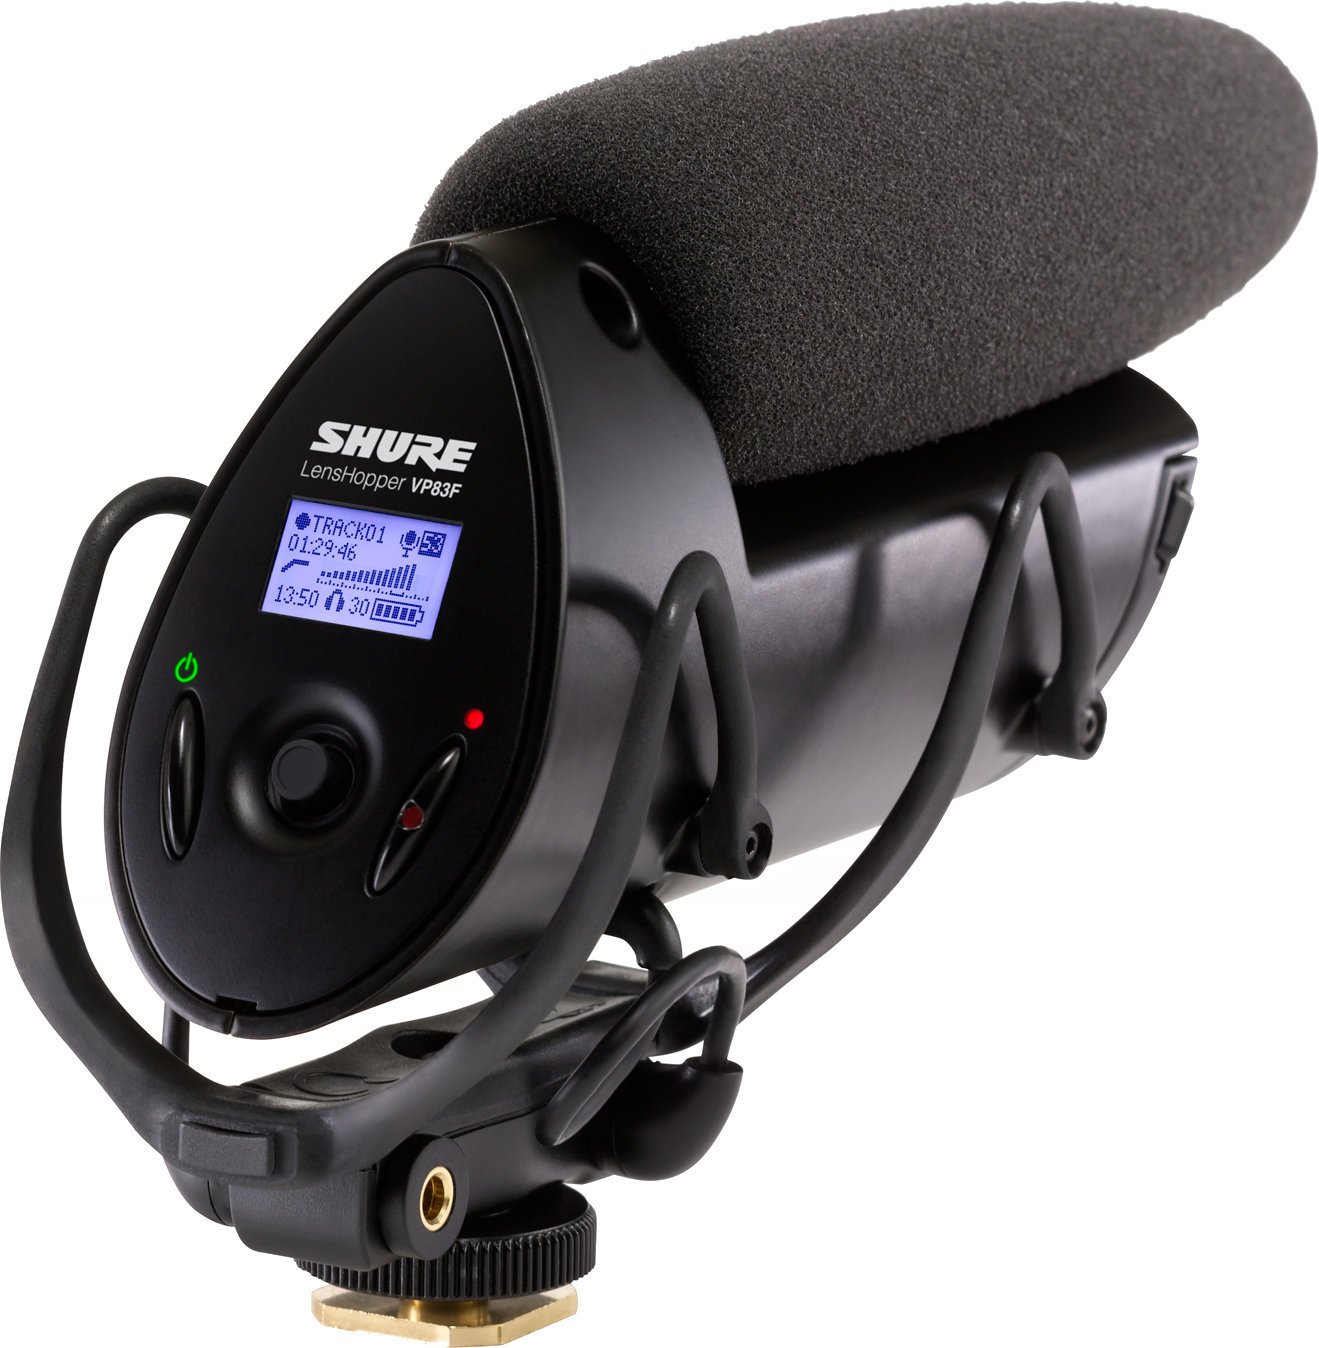 Video mikrofon Shure VP83F LensHopper